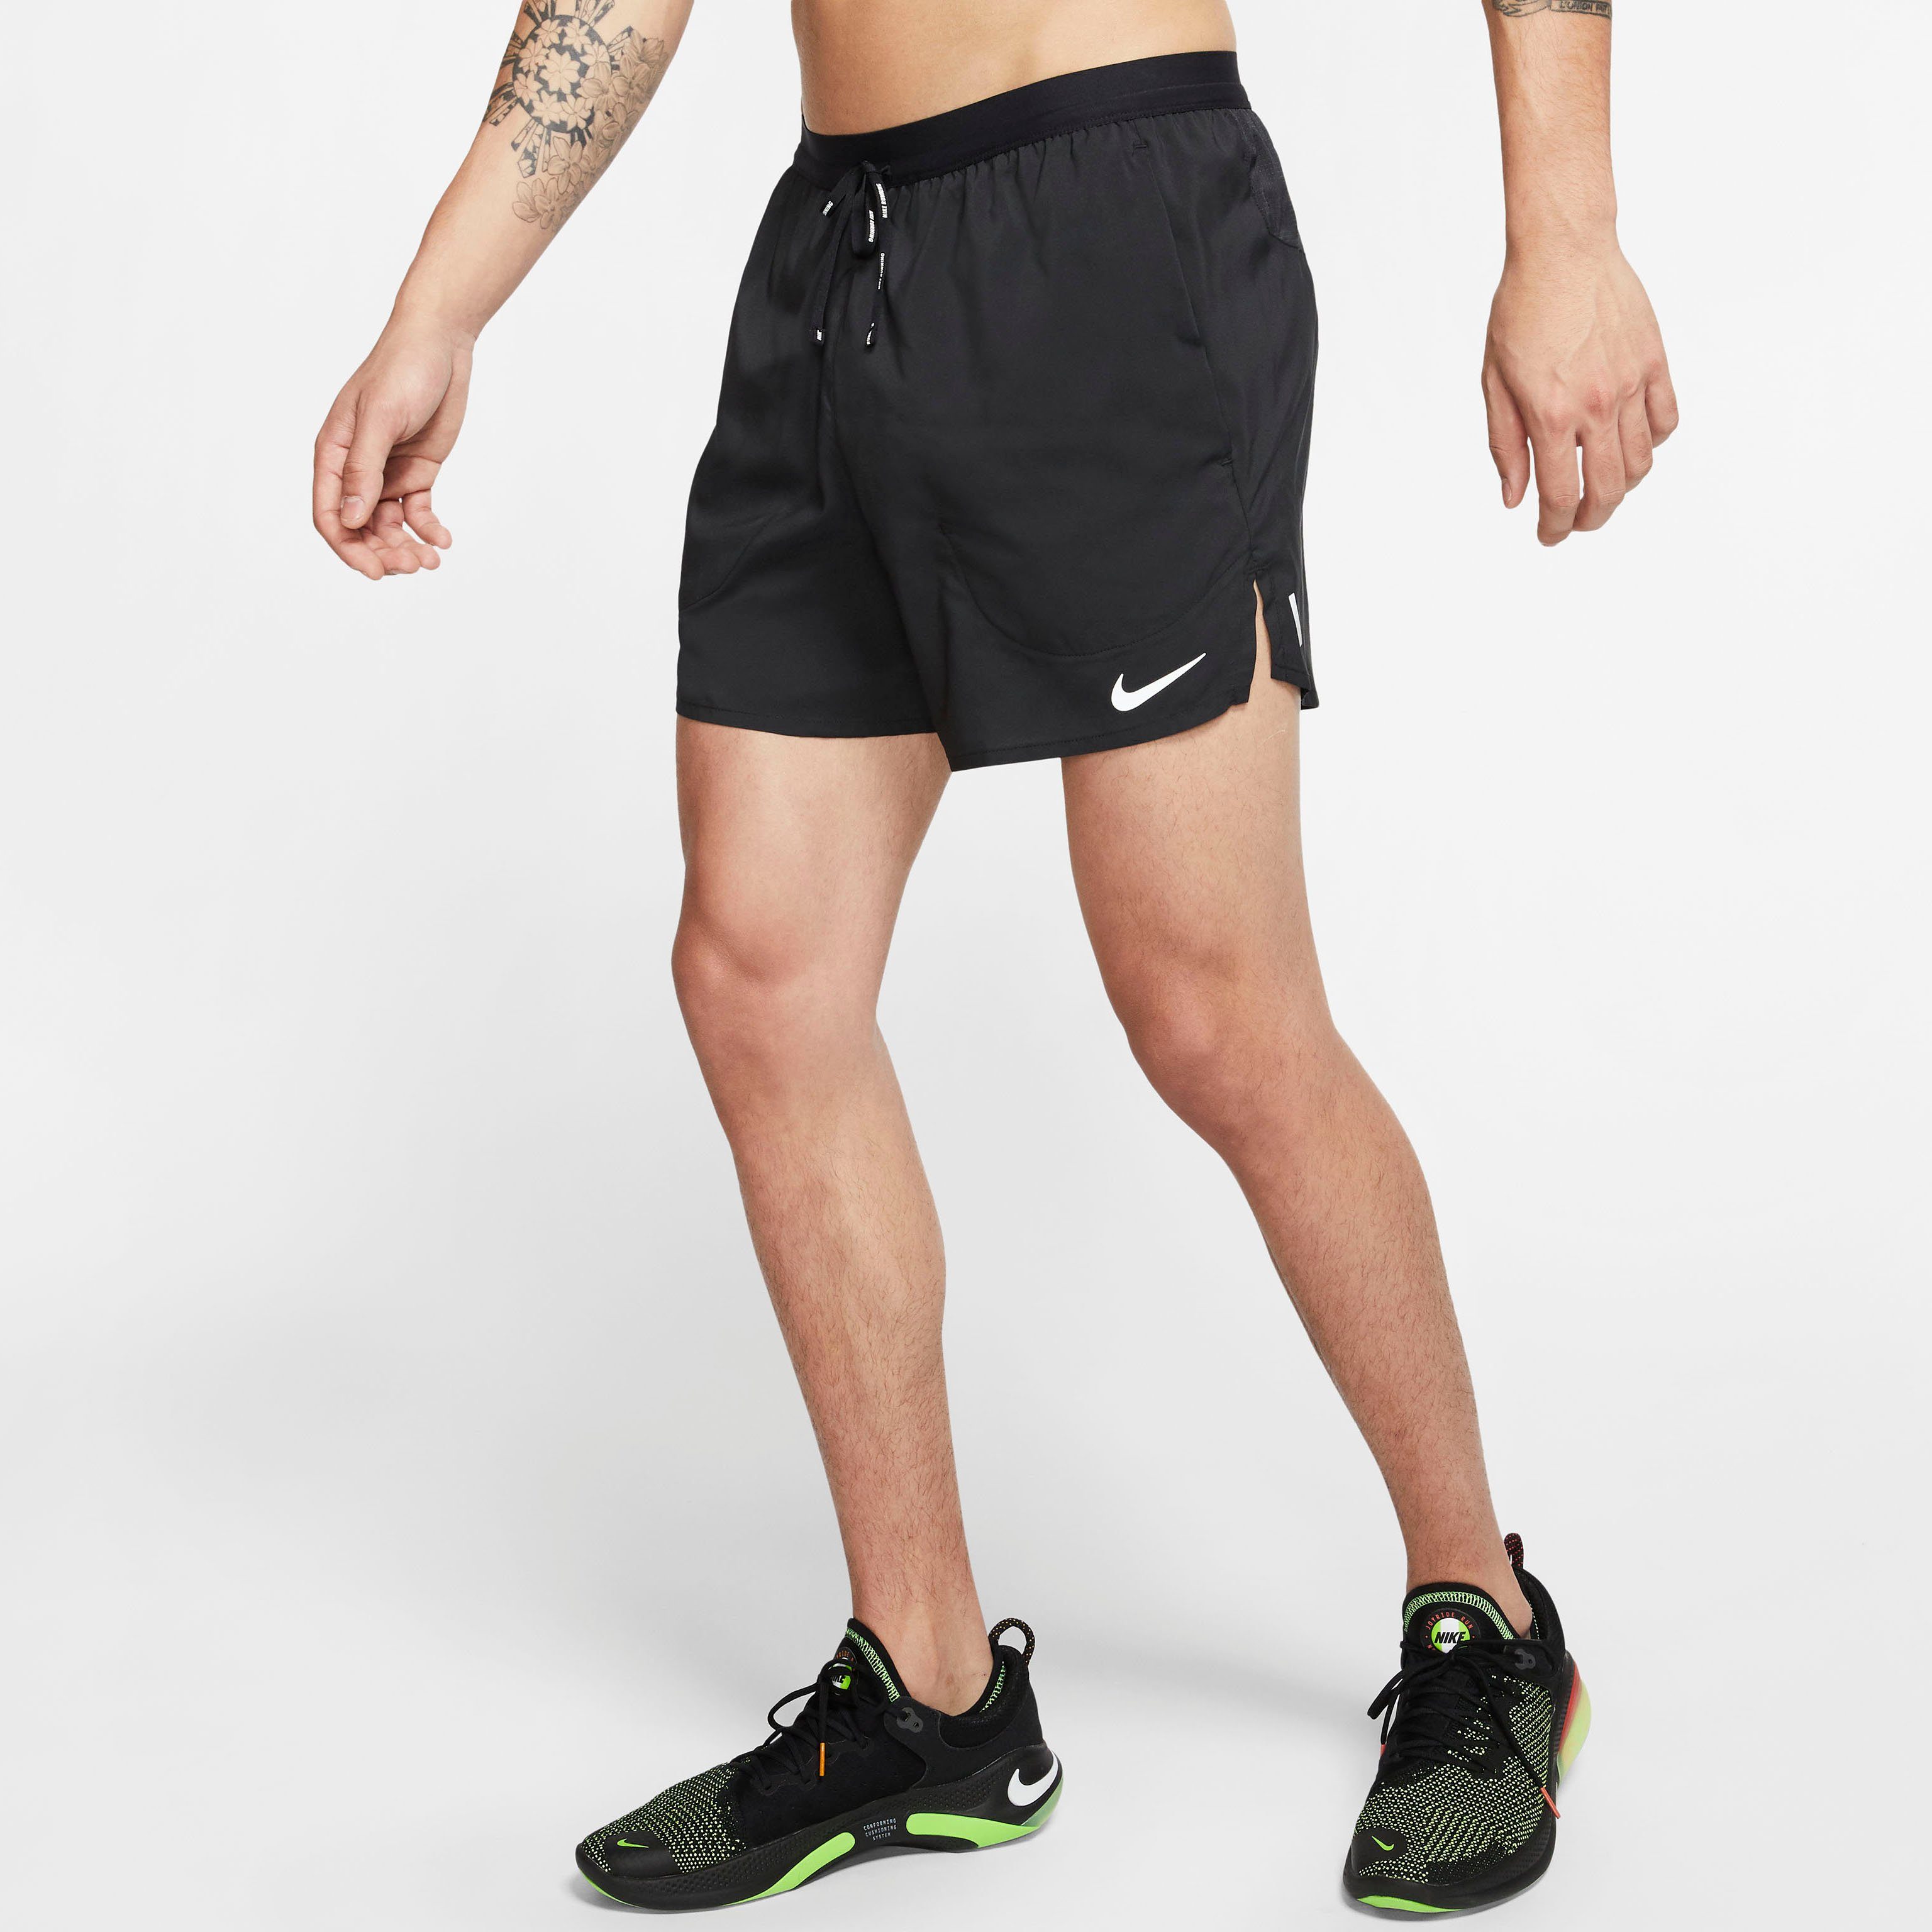 nike men's short running shorts